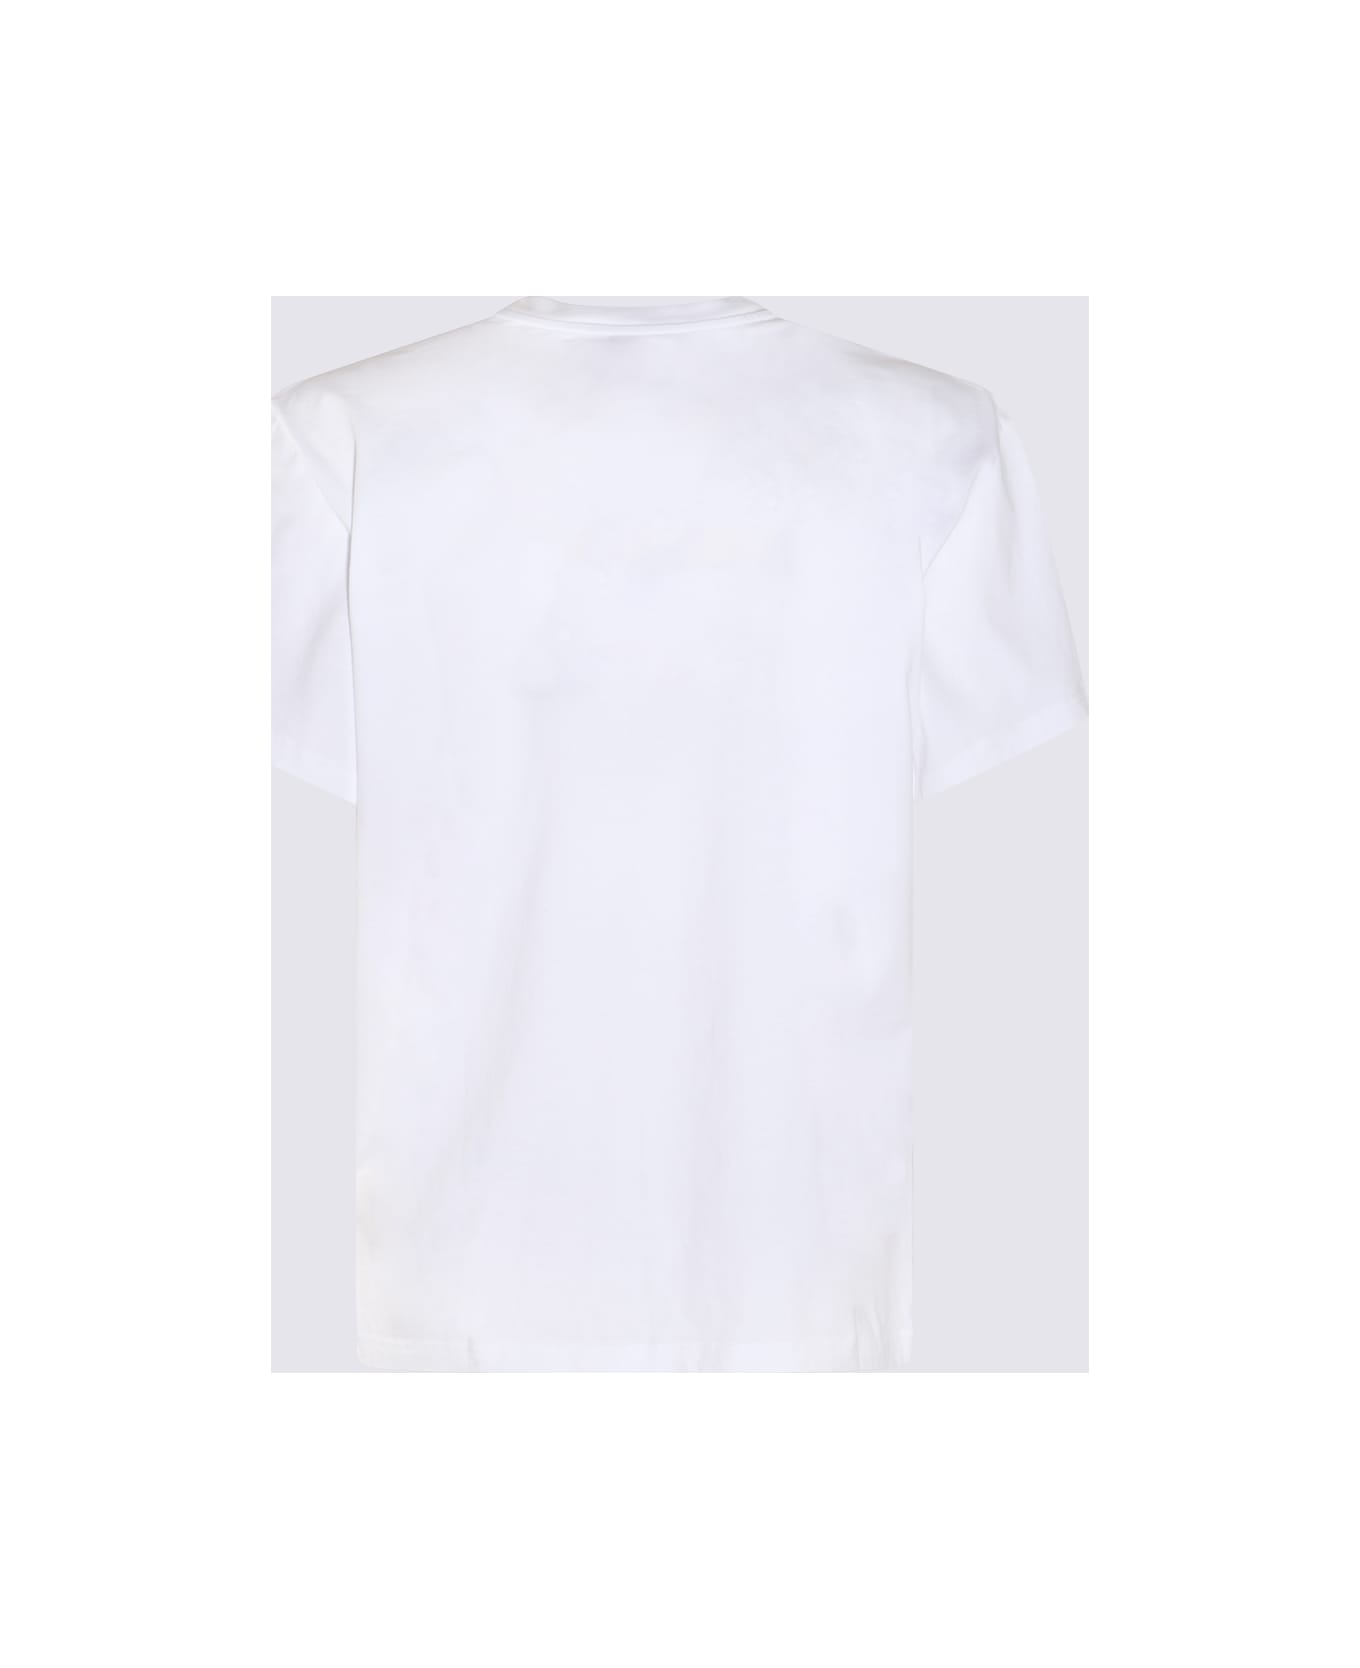 J.W. Anderson White Cotton T-shirt - White